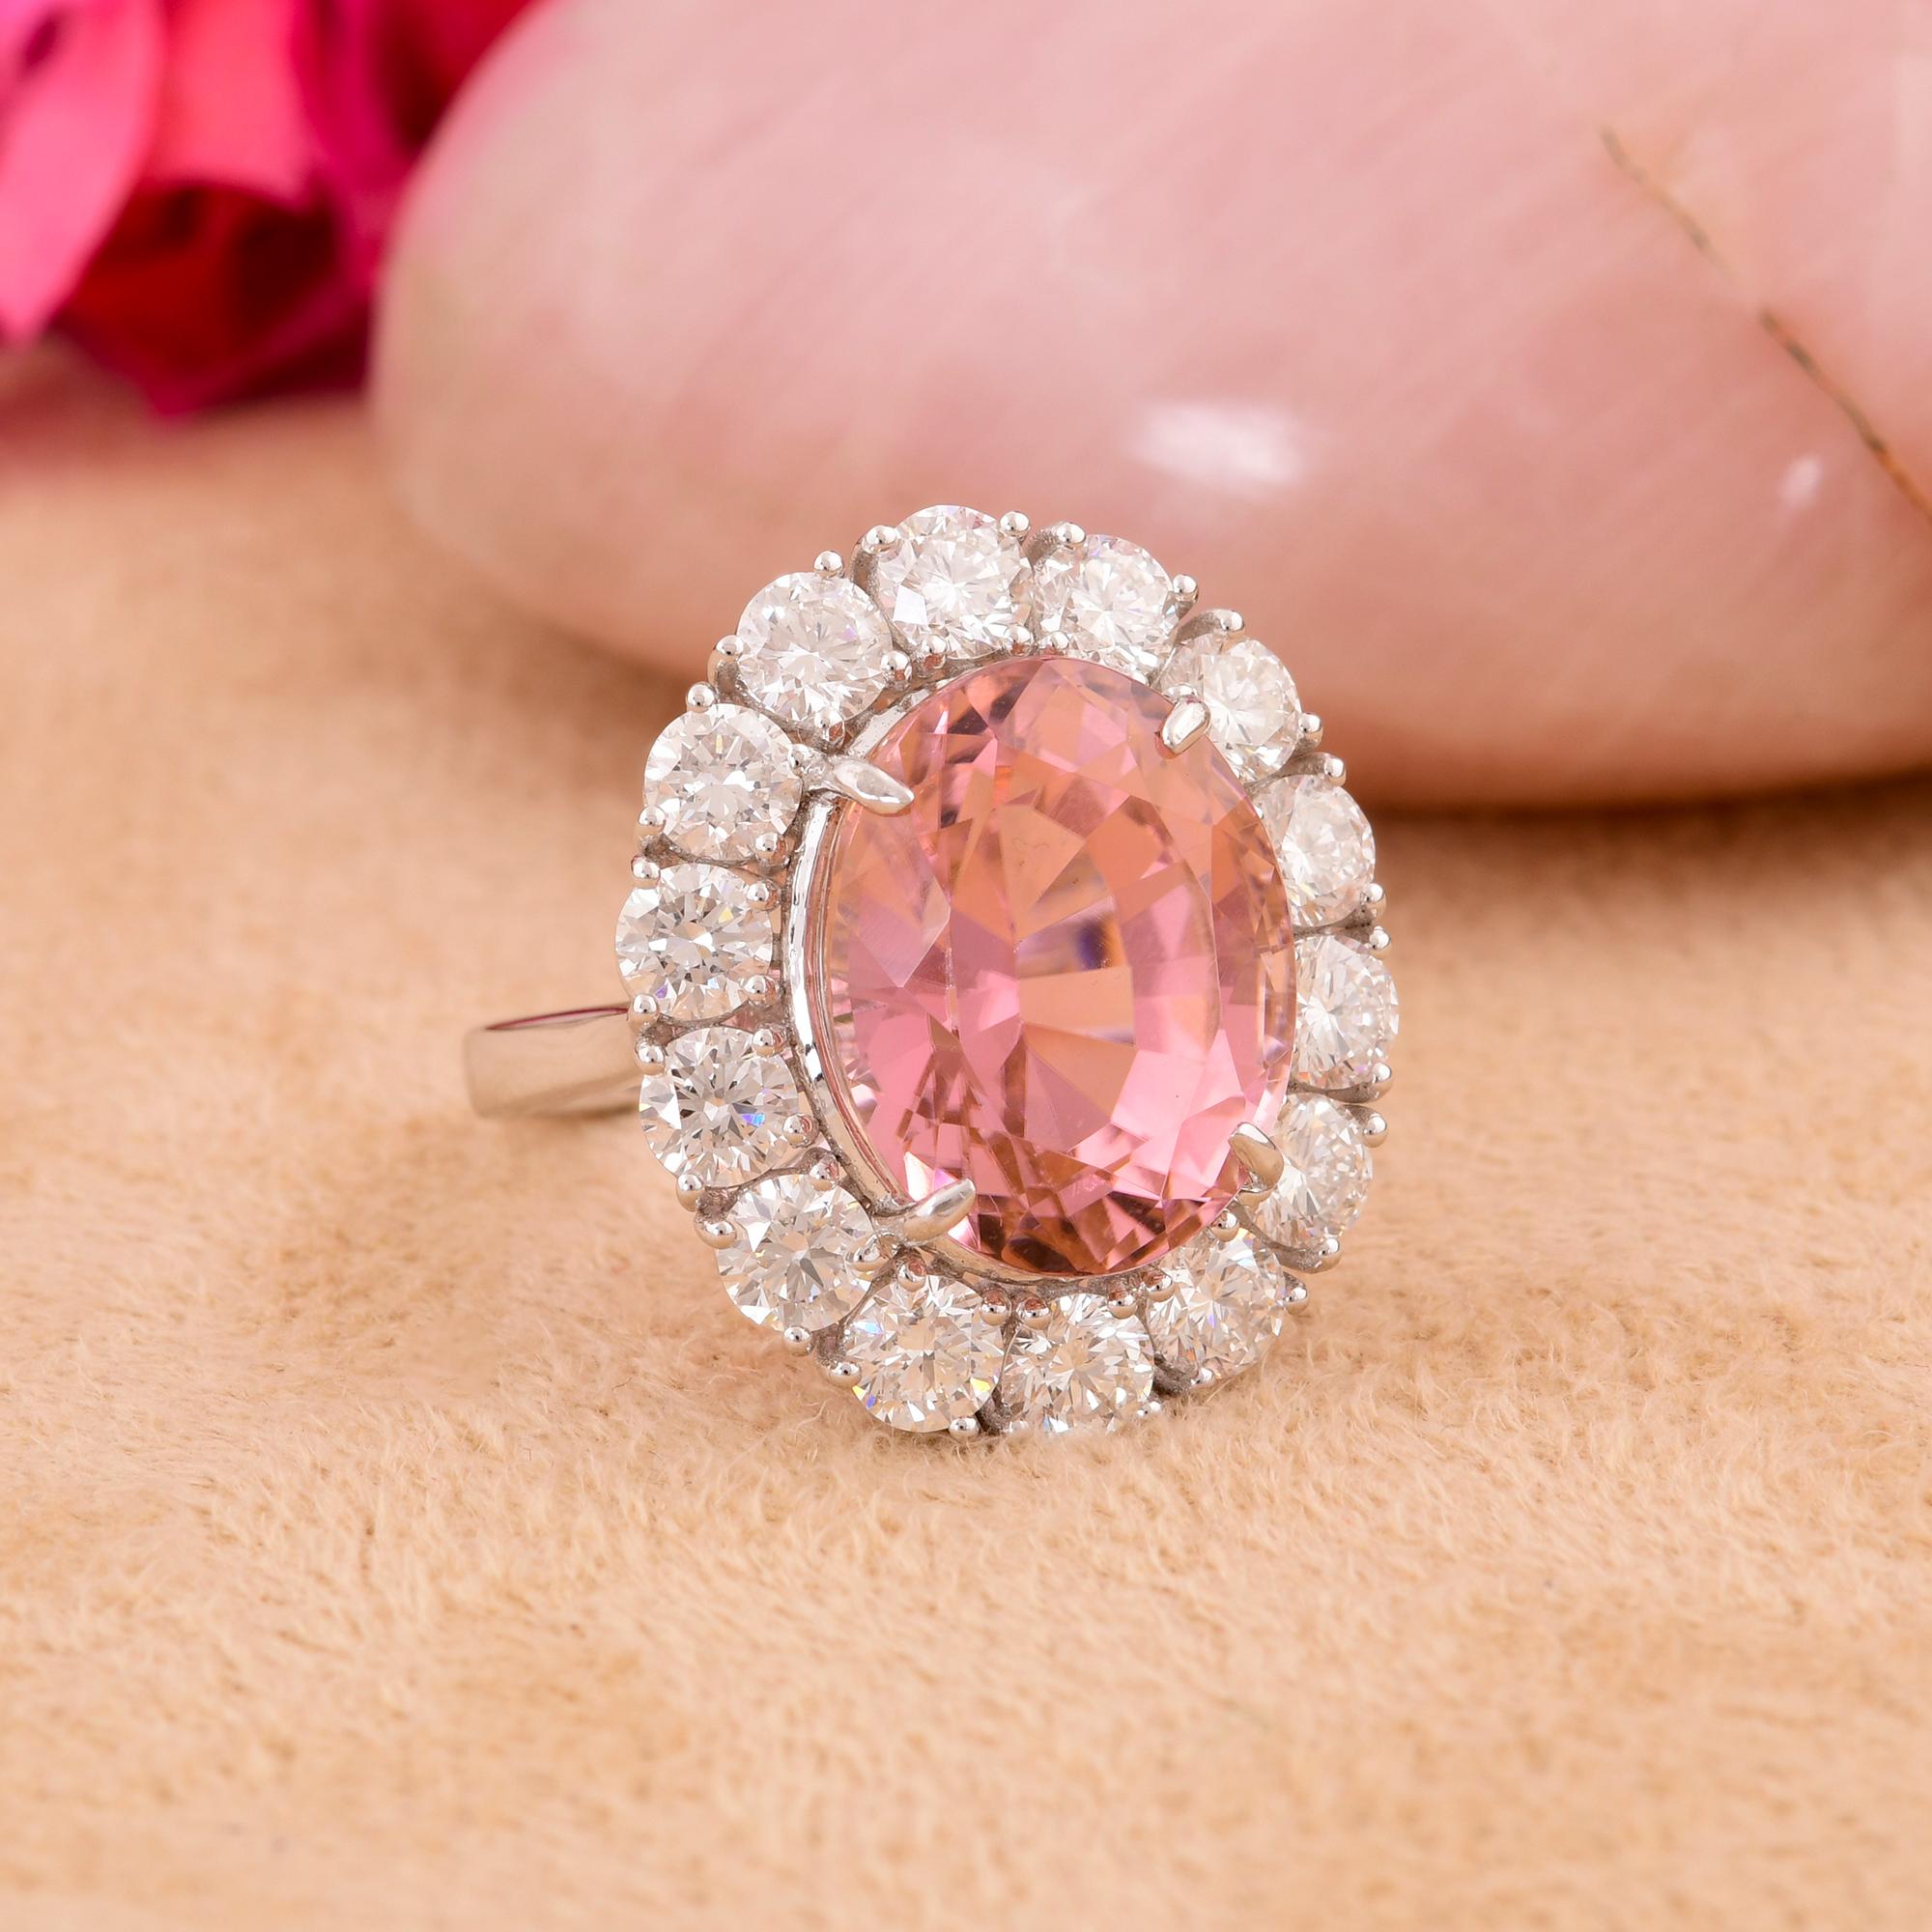 Women's Oval Pink Tourmaline Gemstone Cocktail Ring Diamond 14 Karat White Gold Jewelry For Sale